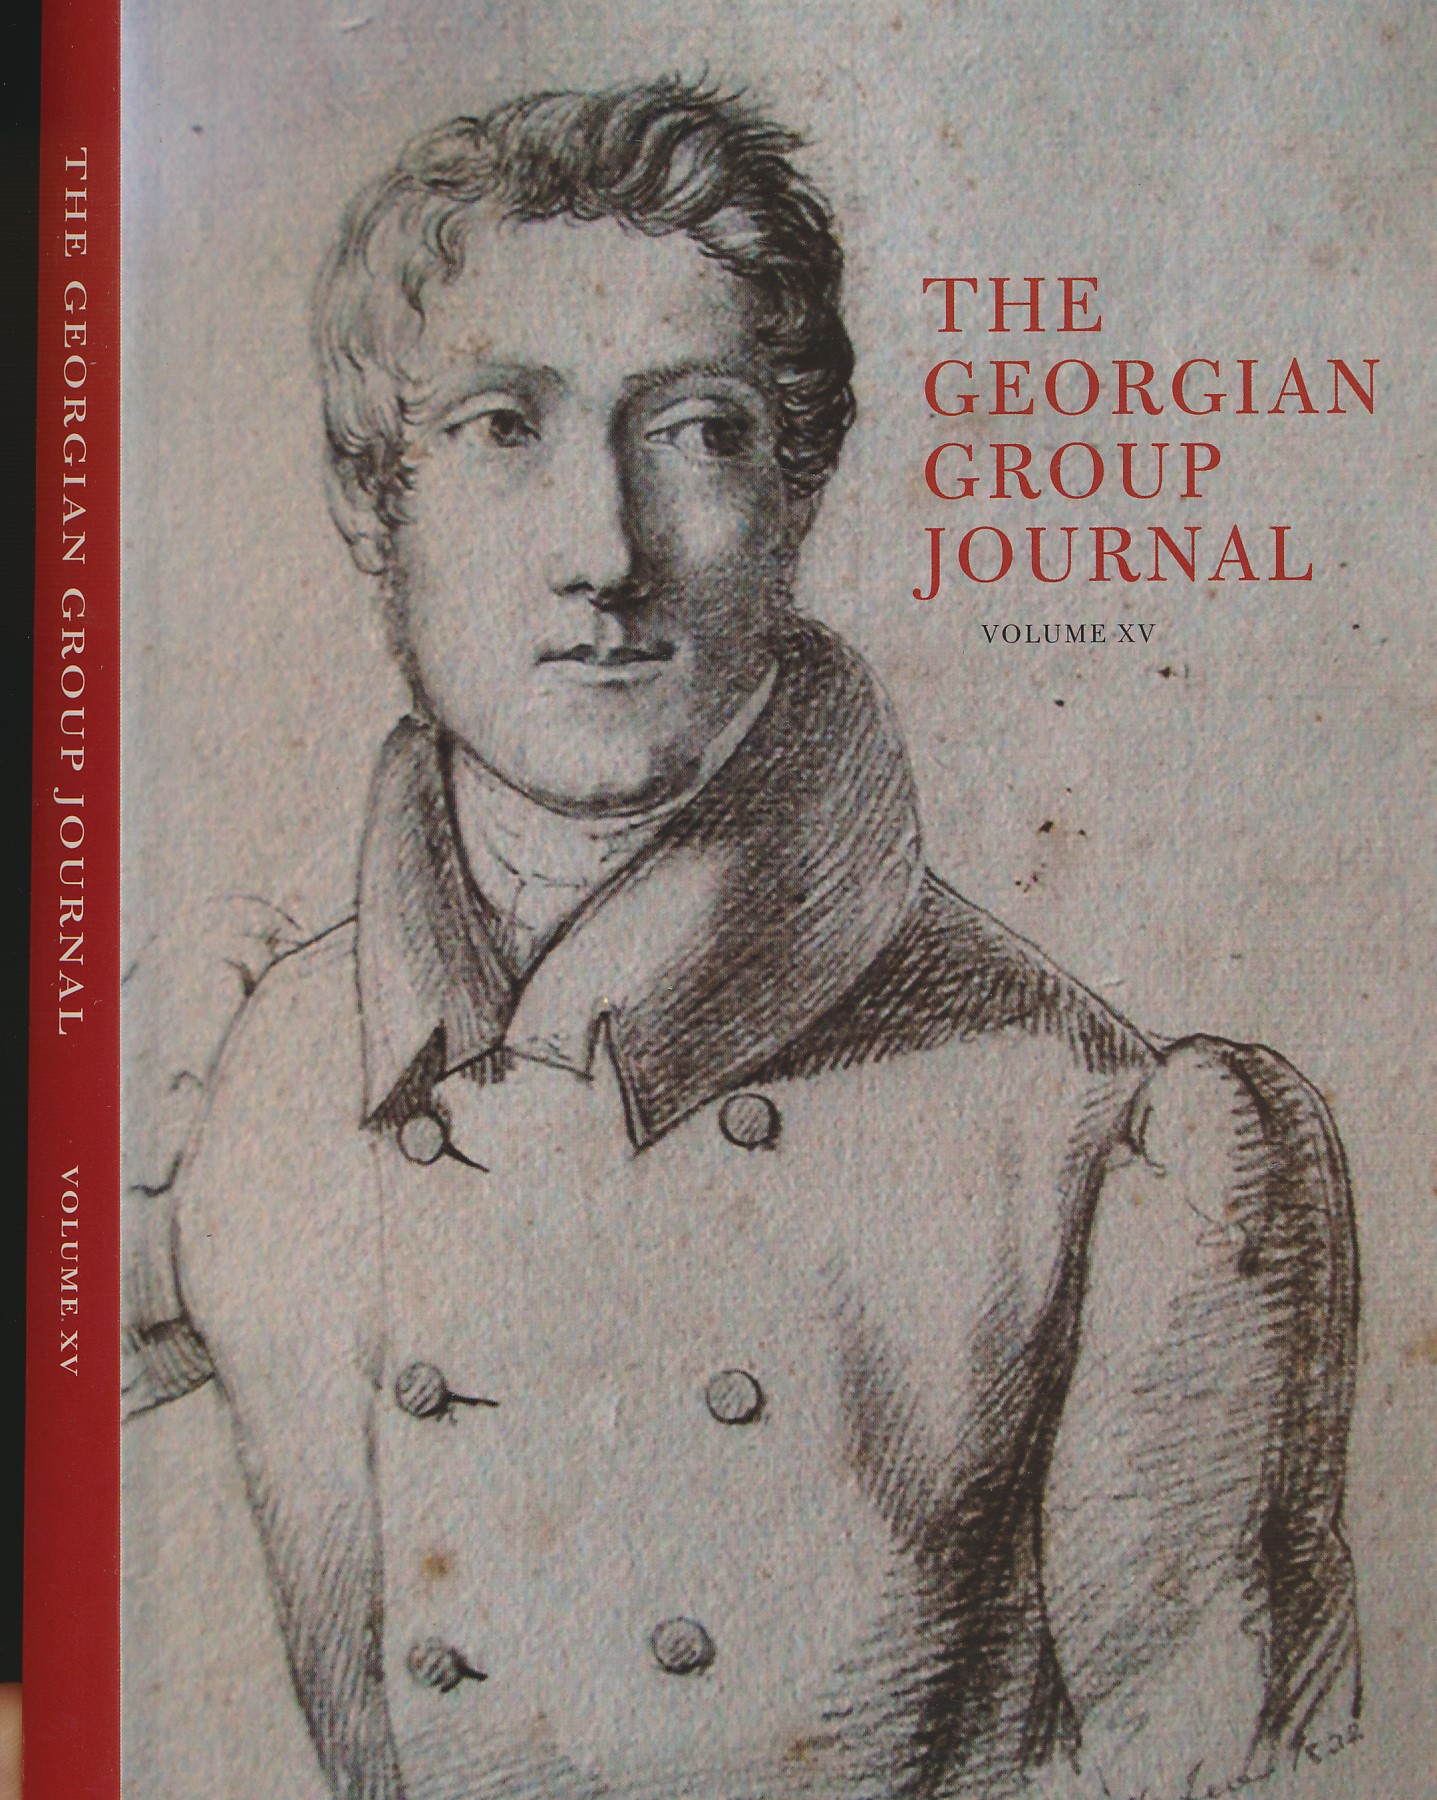 HEWLINGS, RICHARD [ED.] - The Georgian Group Journal. Volume XV [2006]